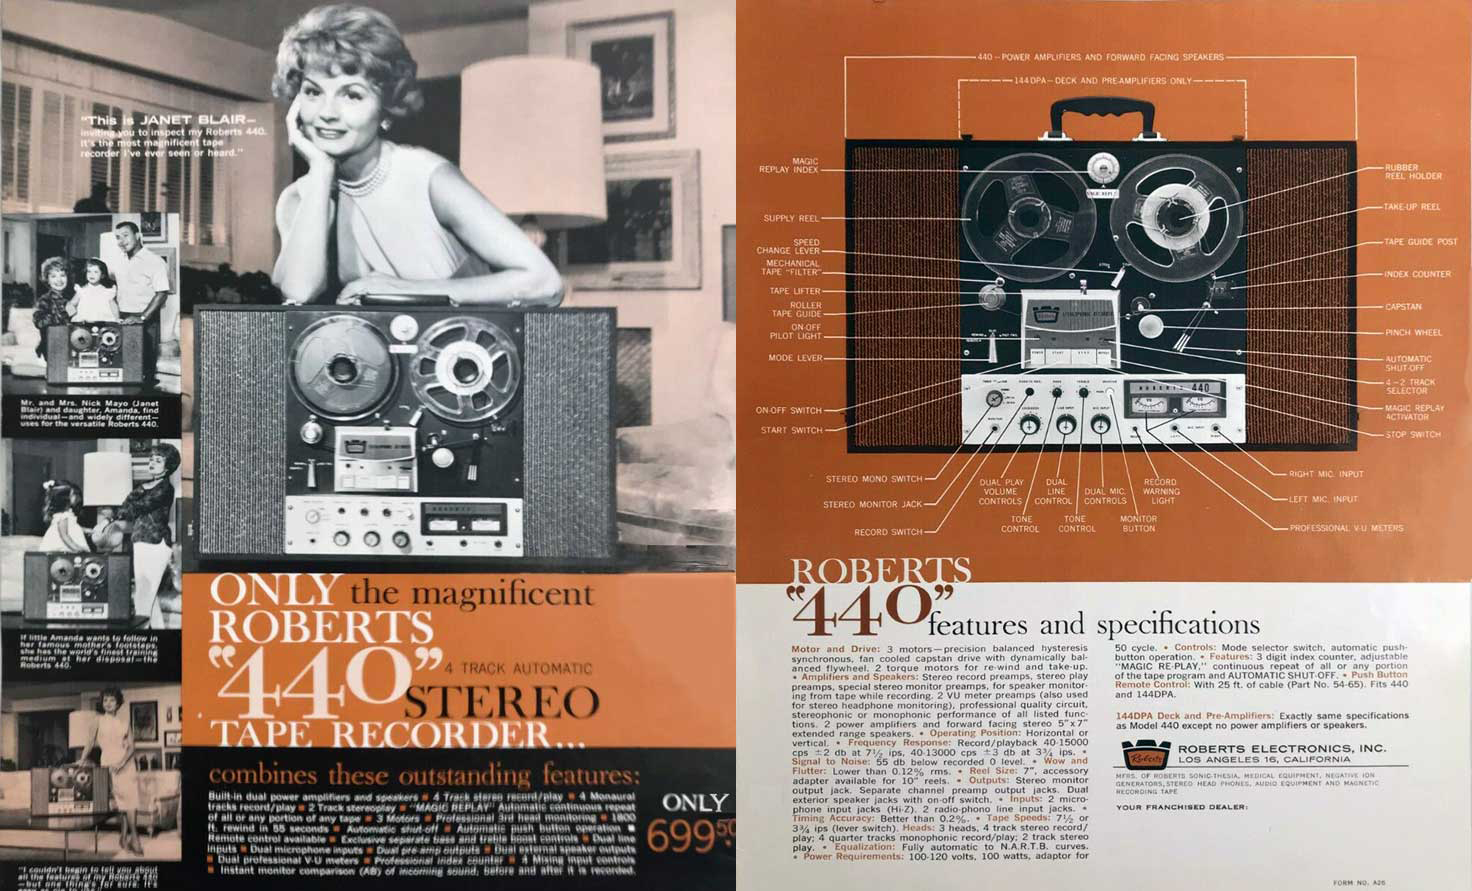 Janet Blair promoting the Roberts 440 reel to reel tape recorder